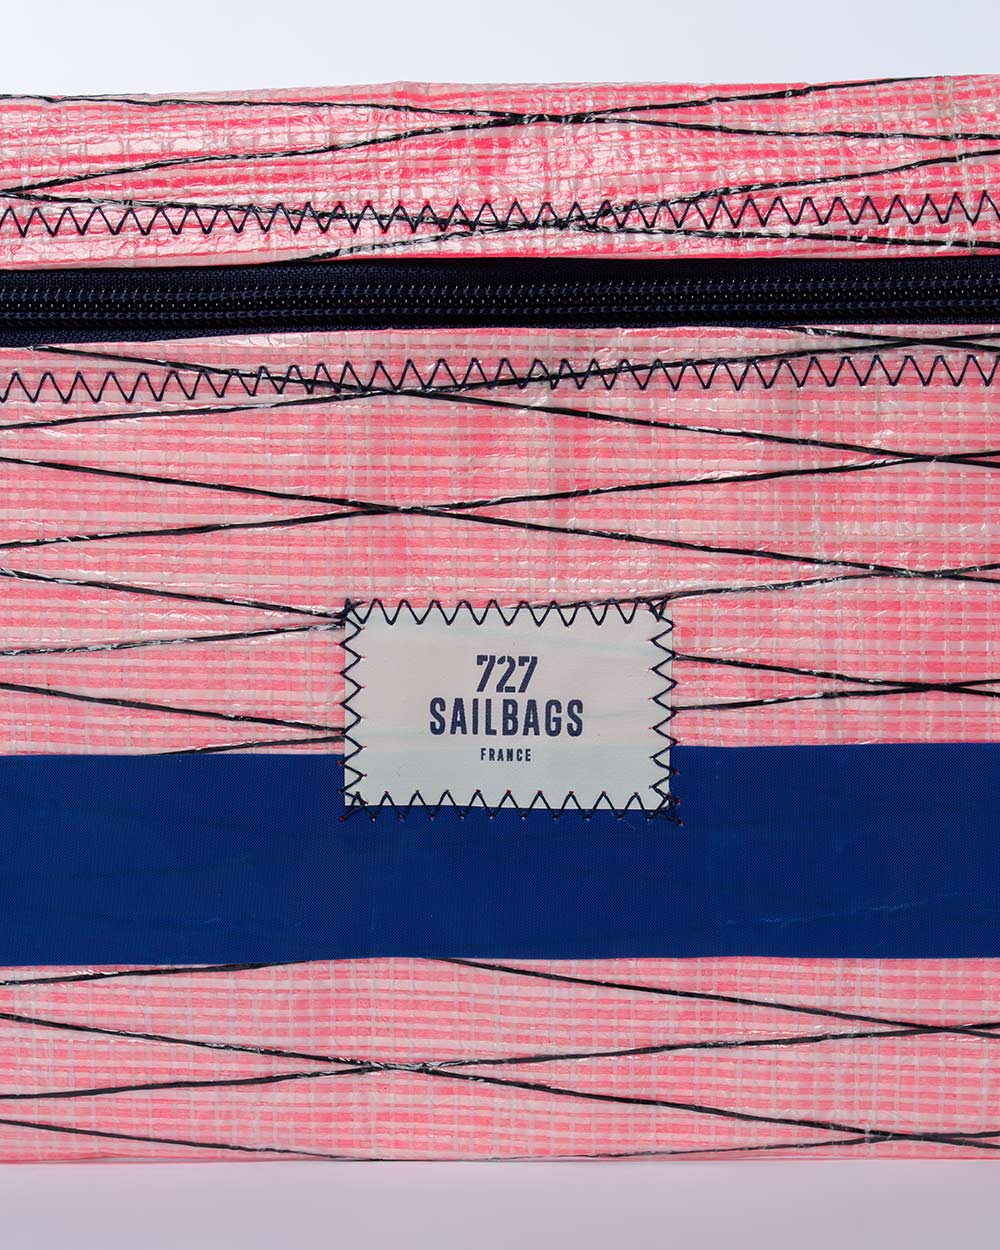 Geldbeutel "Petit Sac" by 727 Sailbags / Segeltuch pink navy